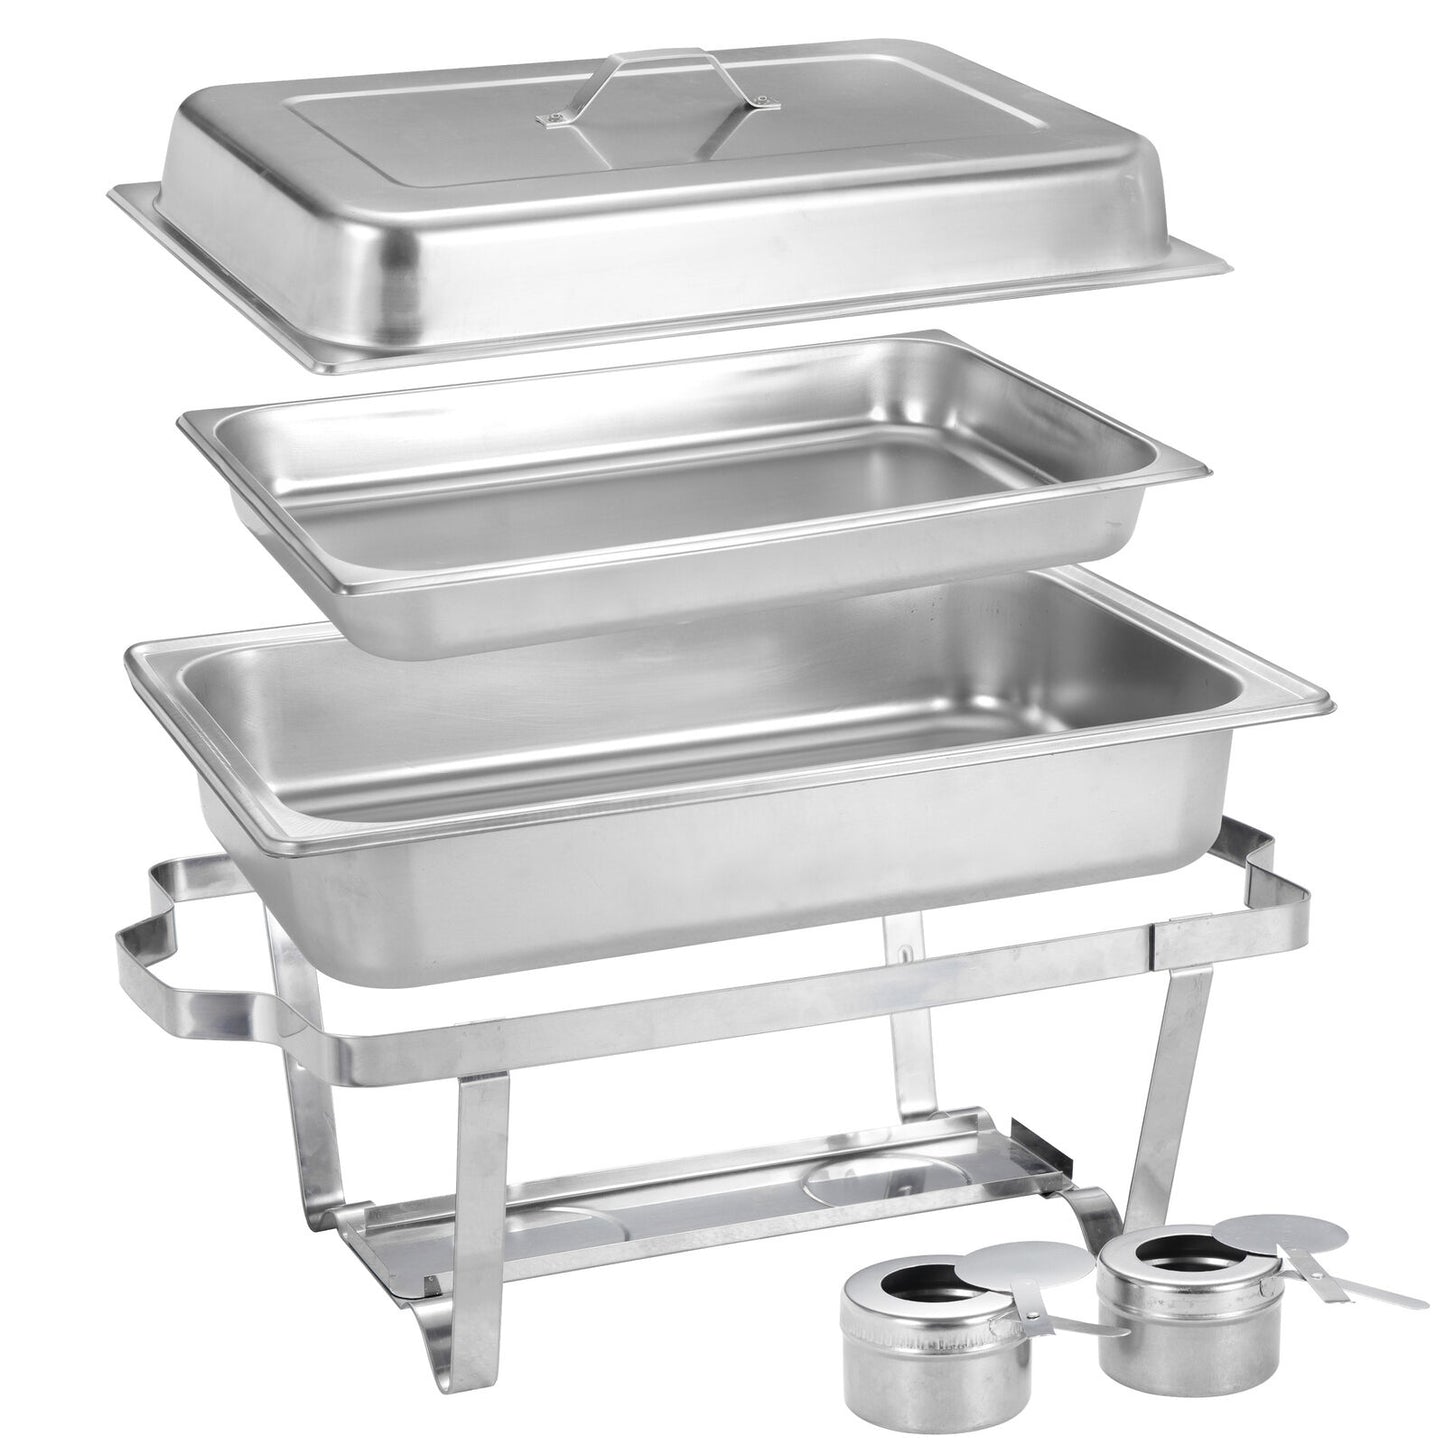 4 Packs Chafing Dish 8 Quart Stainless Steel Full Size Buffet Rectangular Chafer